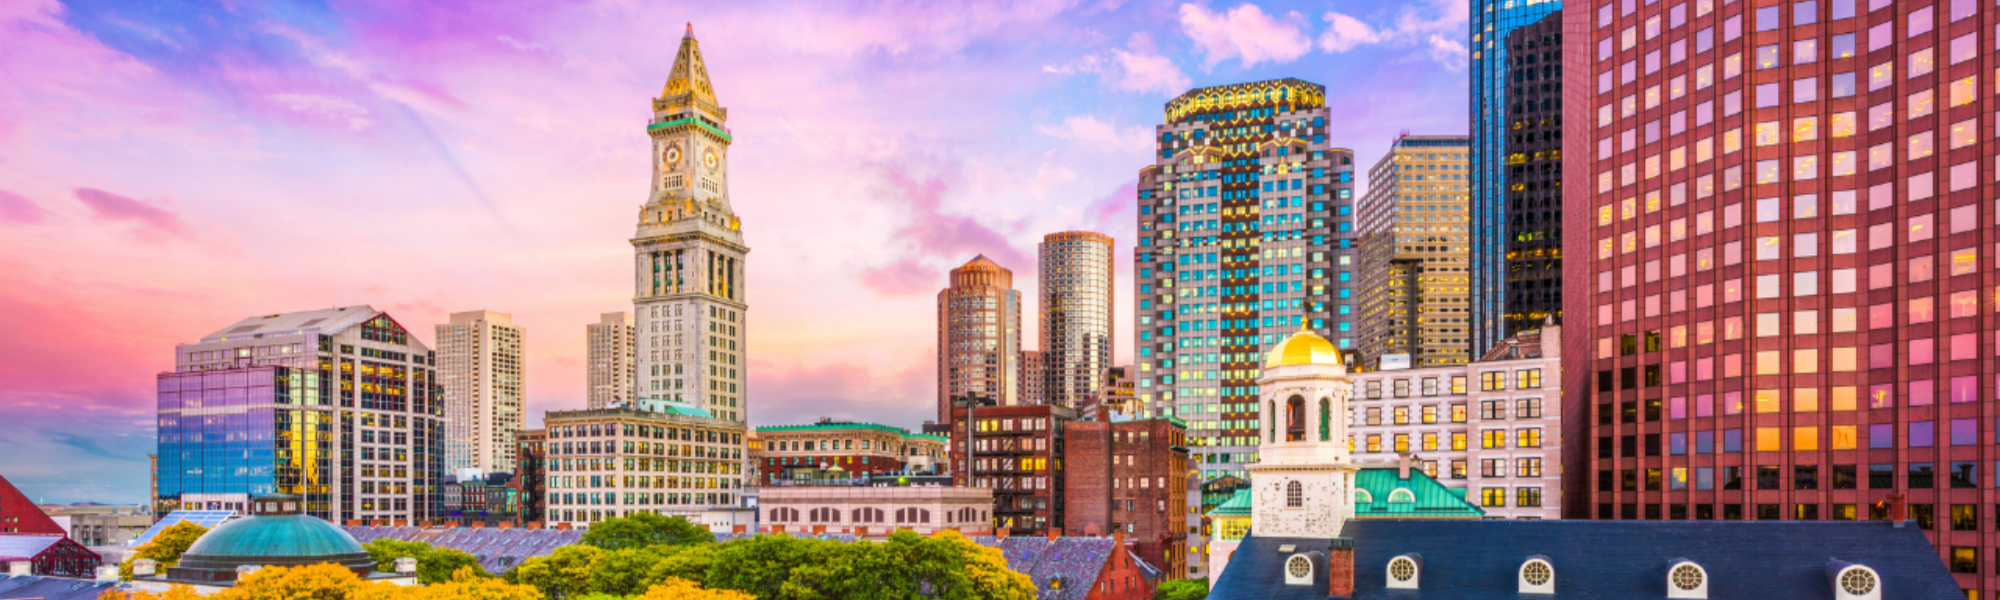 Boston skyline header image